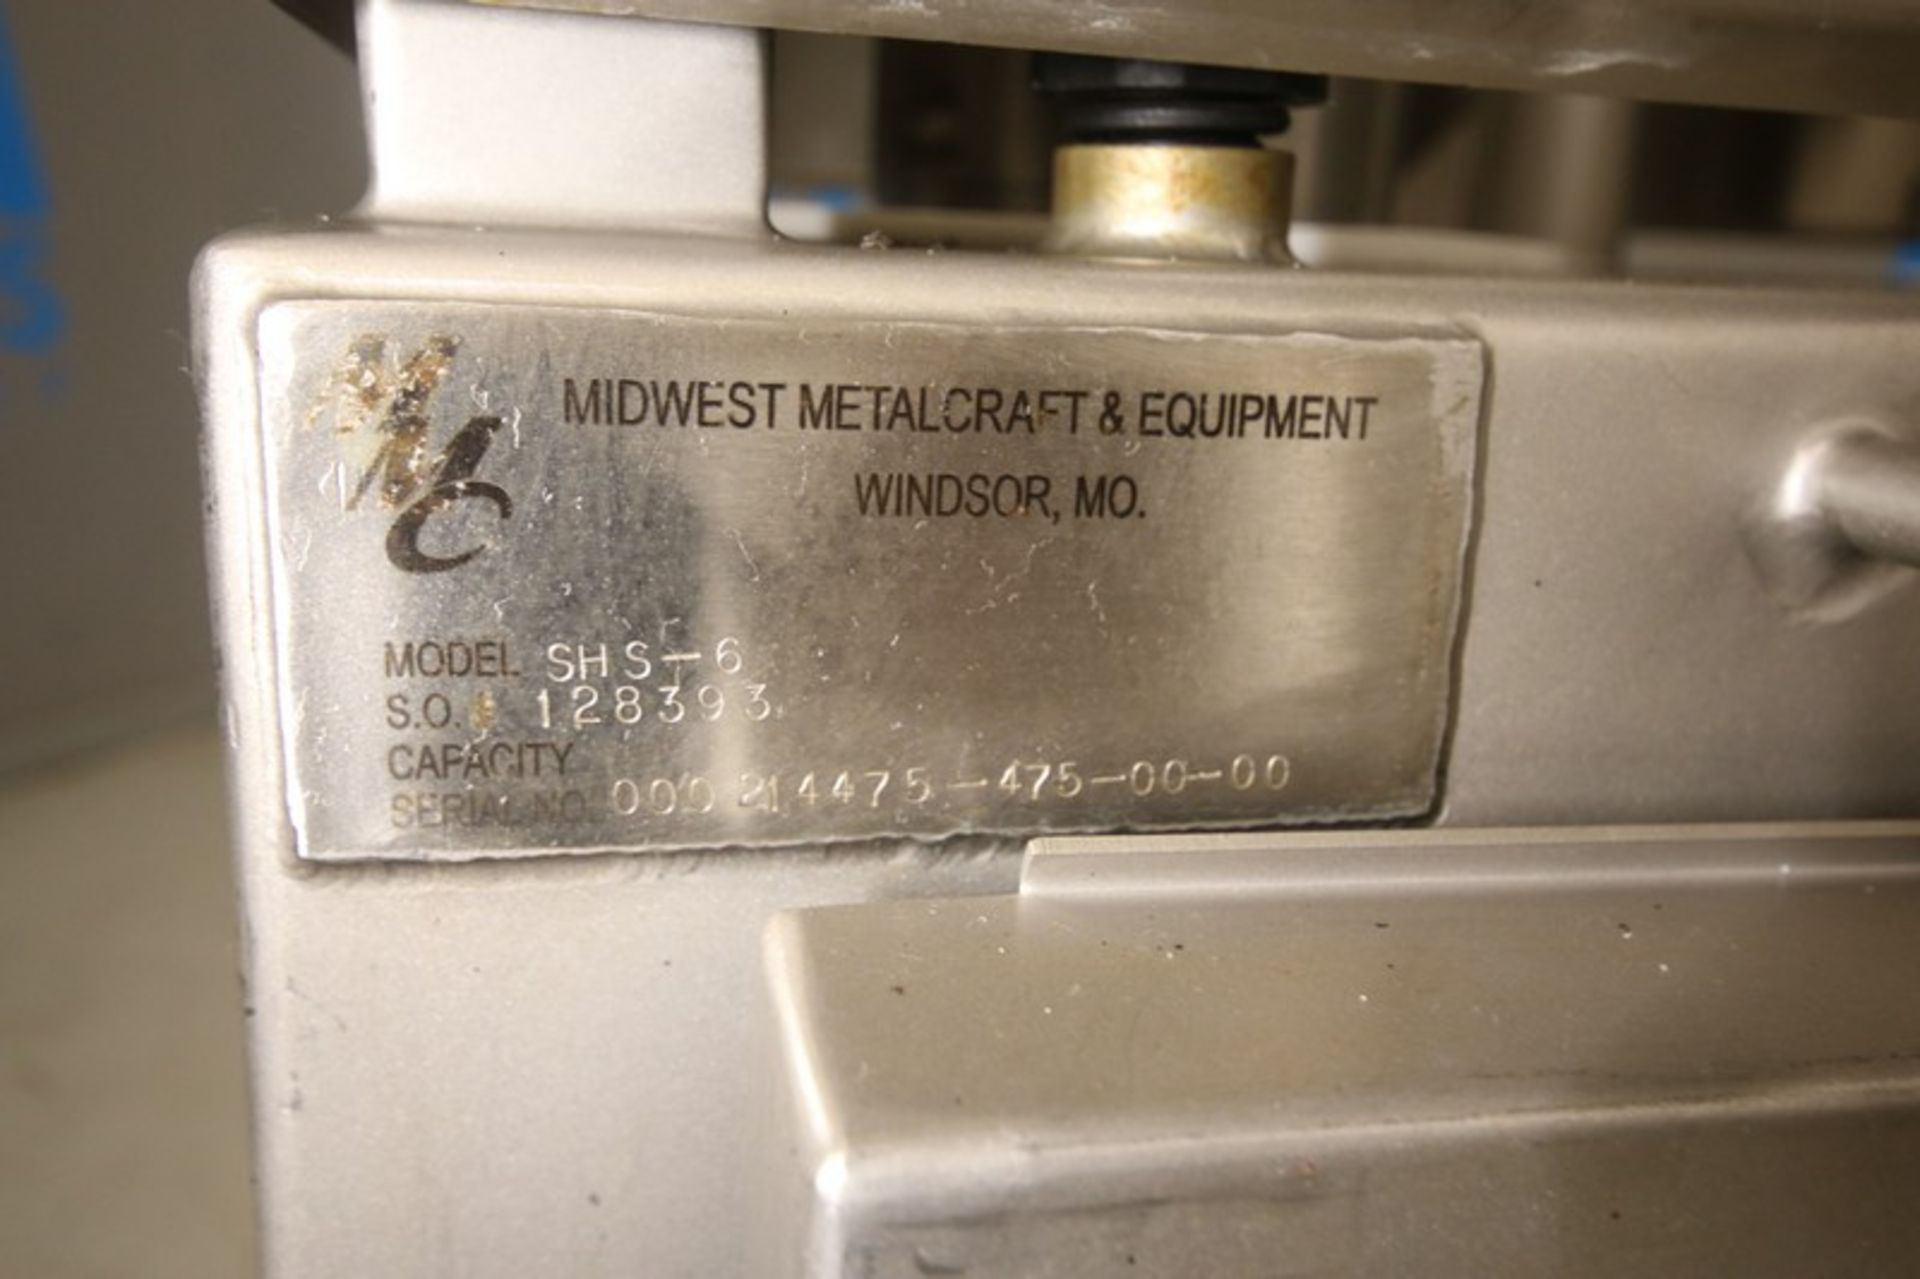 Midwest Metalcraft Equipment Spirocutter, Model SHS-6, SN 000214475-475-00-00, Mitsubishi Melsec PLC - Image 9 of 9